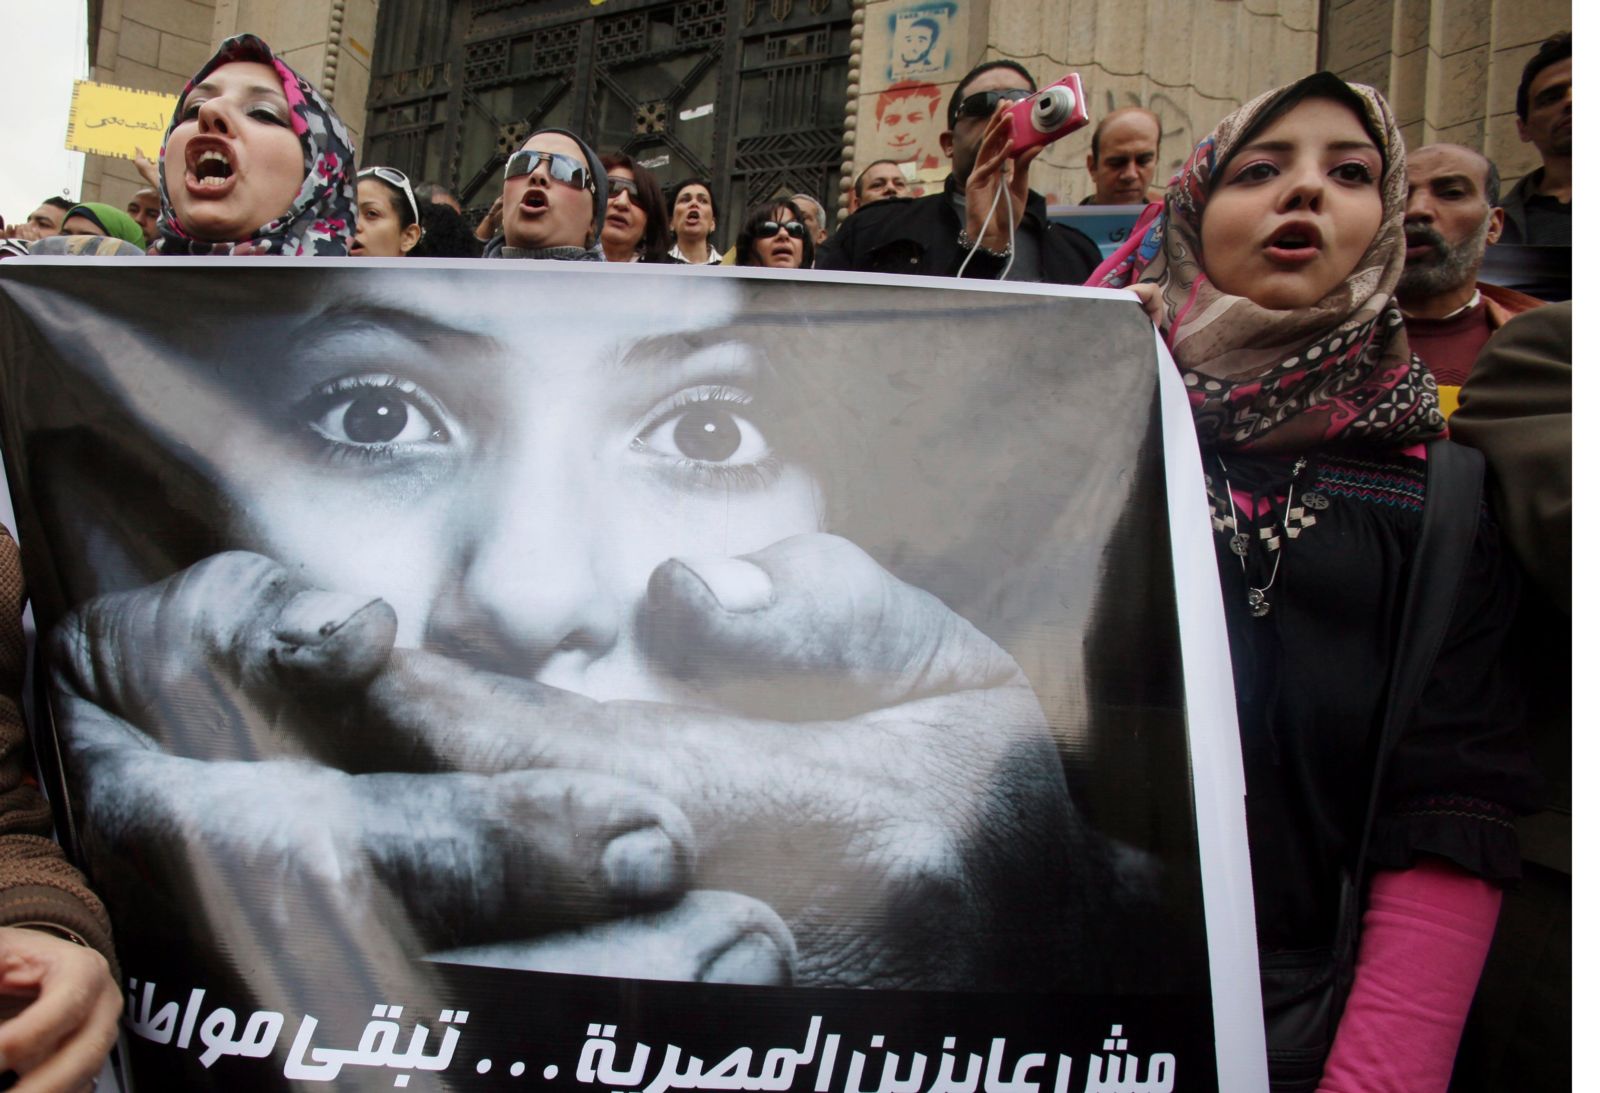 Resist or flee: NGOs respond to Egypt’s crackdown